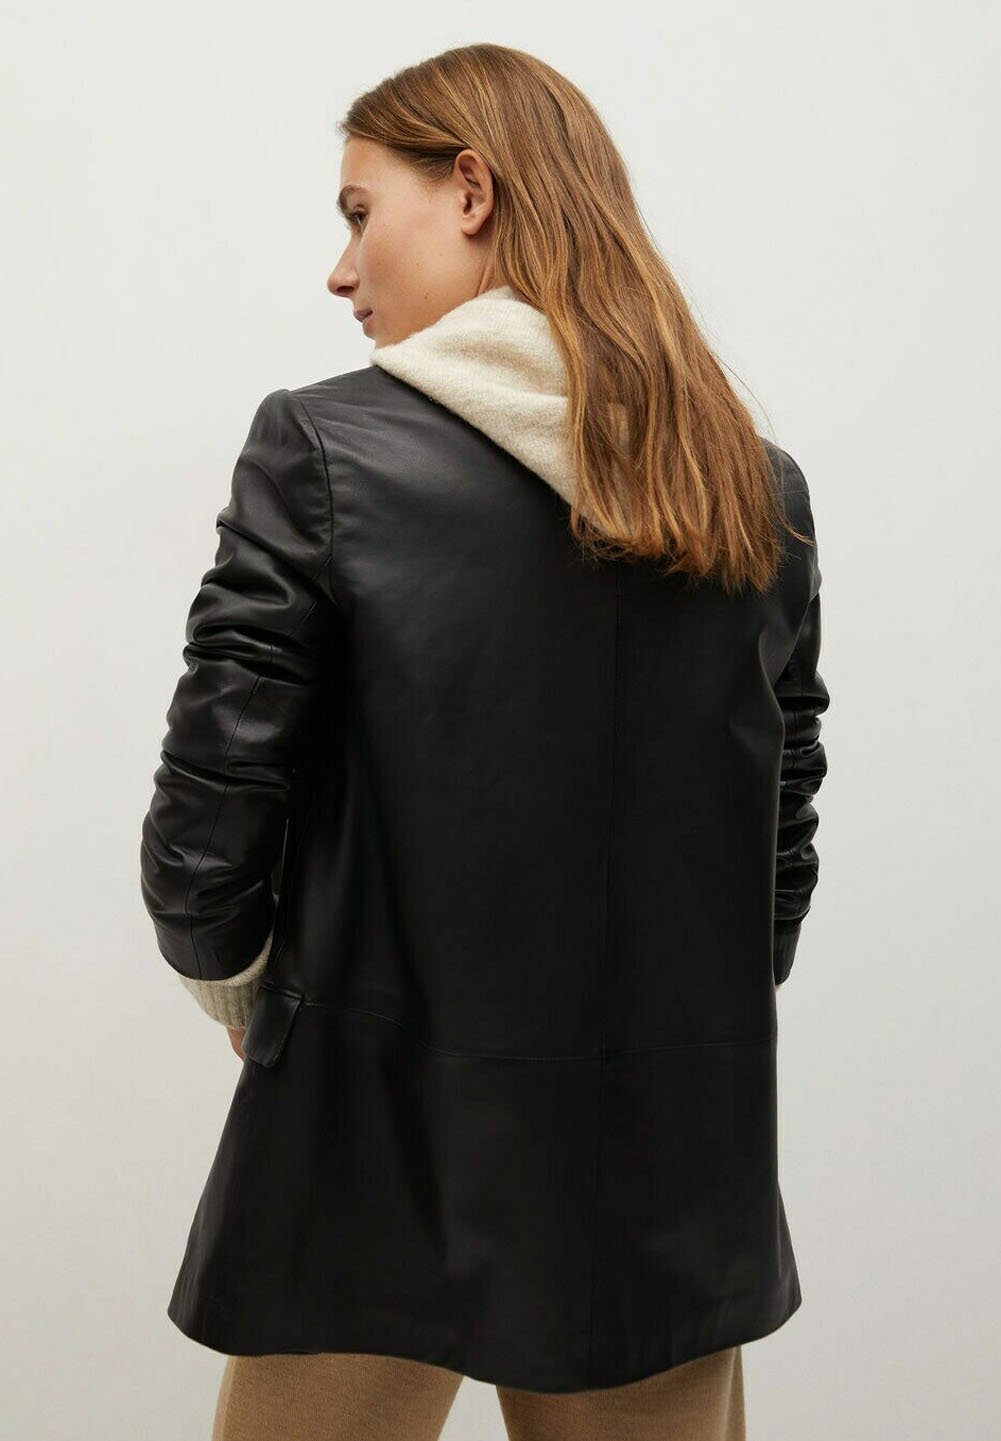 Women’s Oversized Black Leather Coat